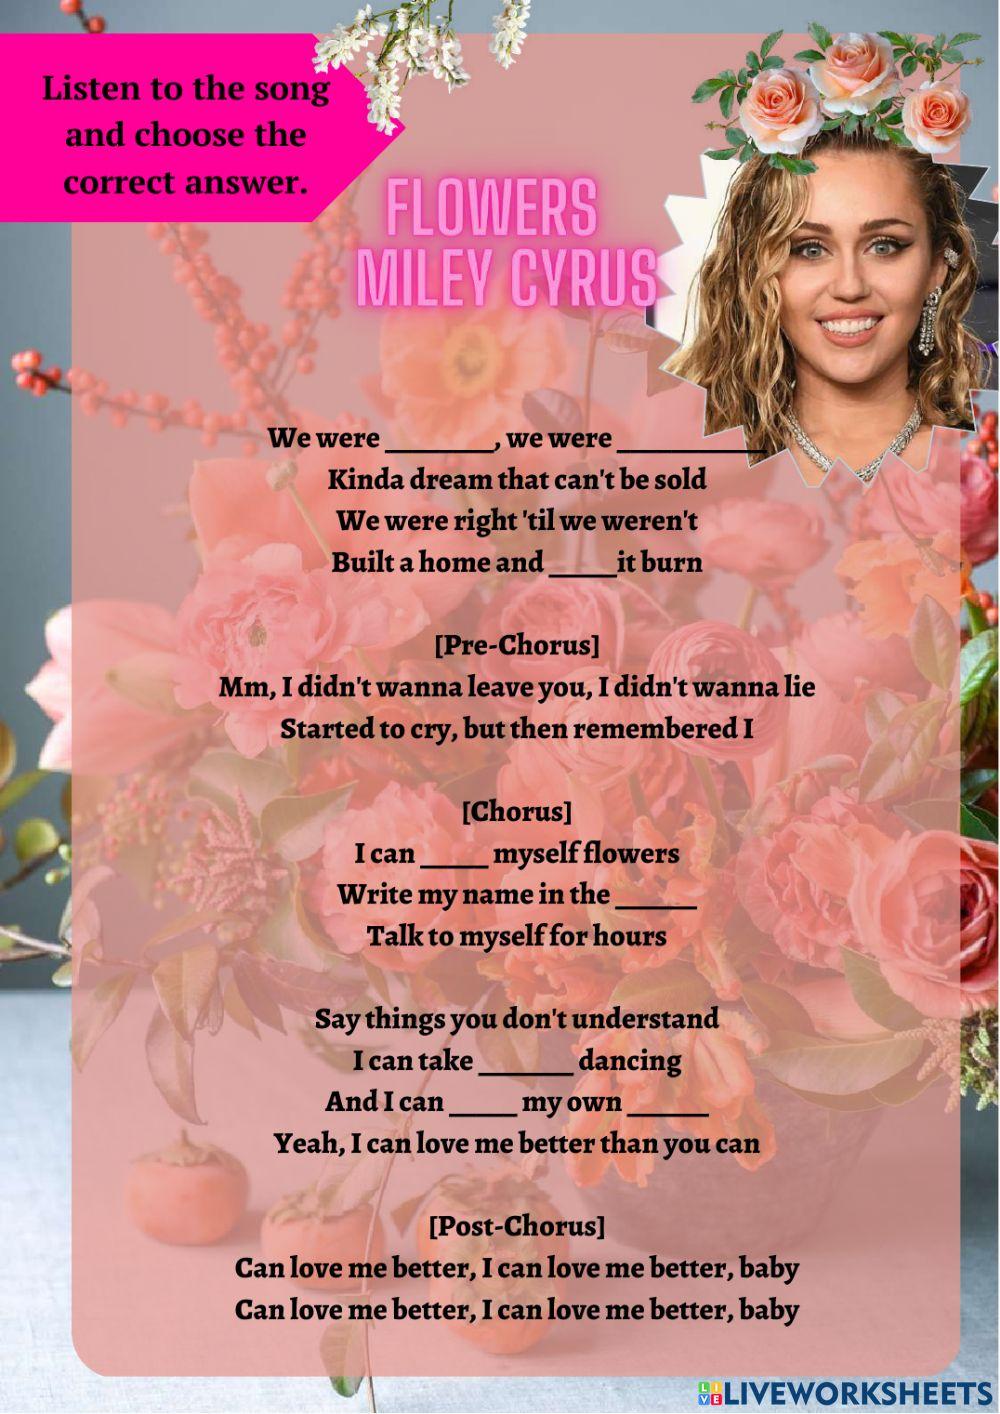 Miley Cyrus Flowers. Майли Сайрус Фловерс текст. Майли сайрус перевод песни flowers на русский